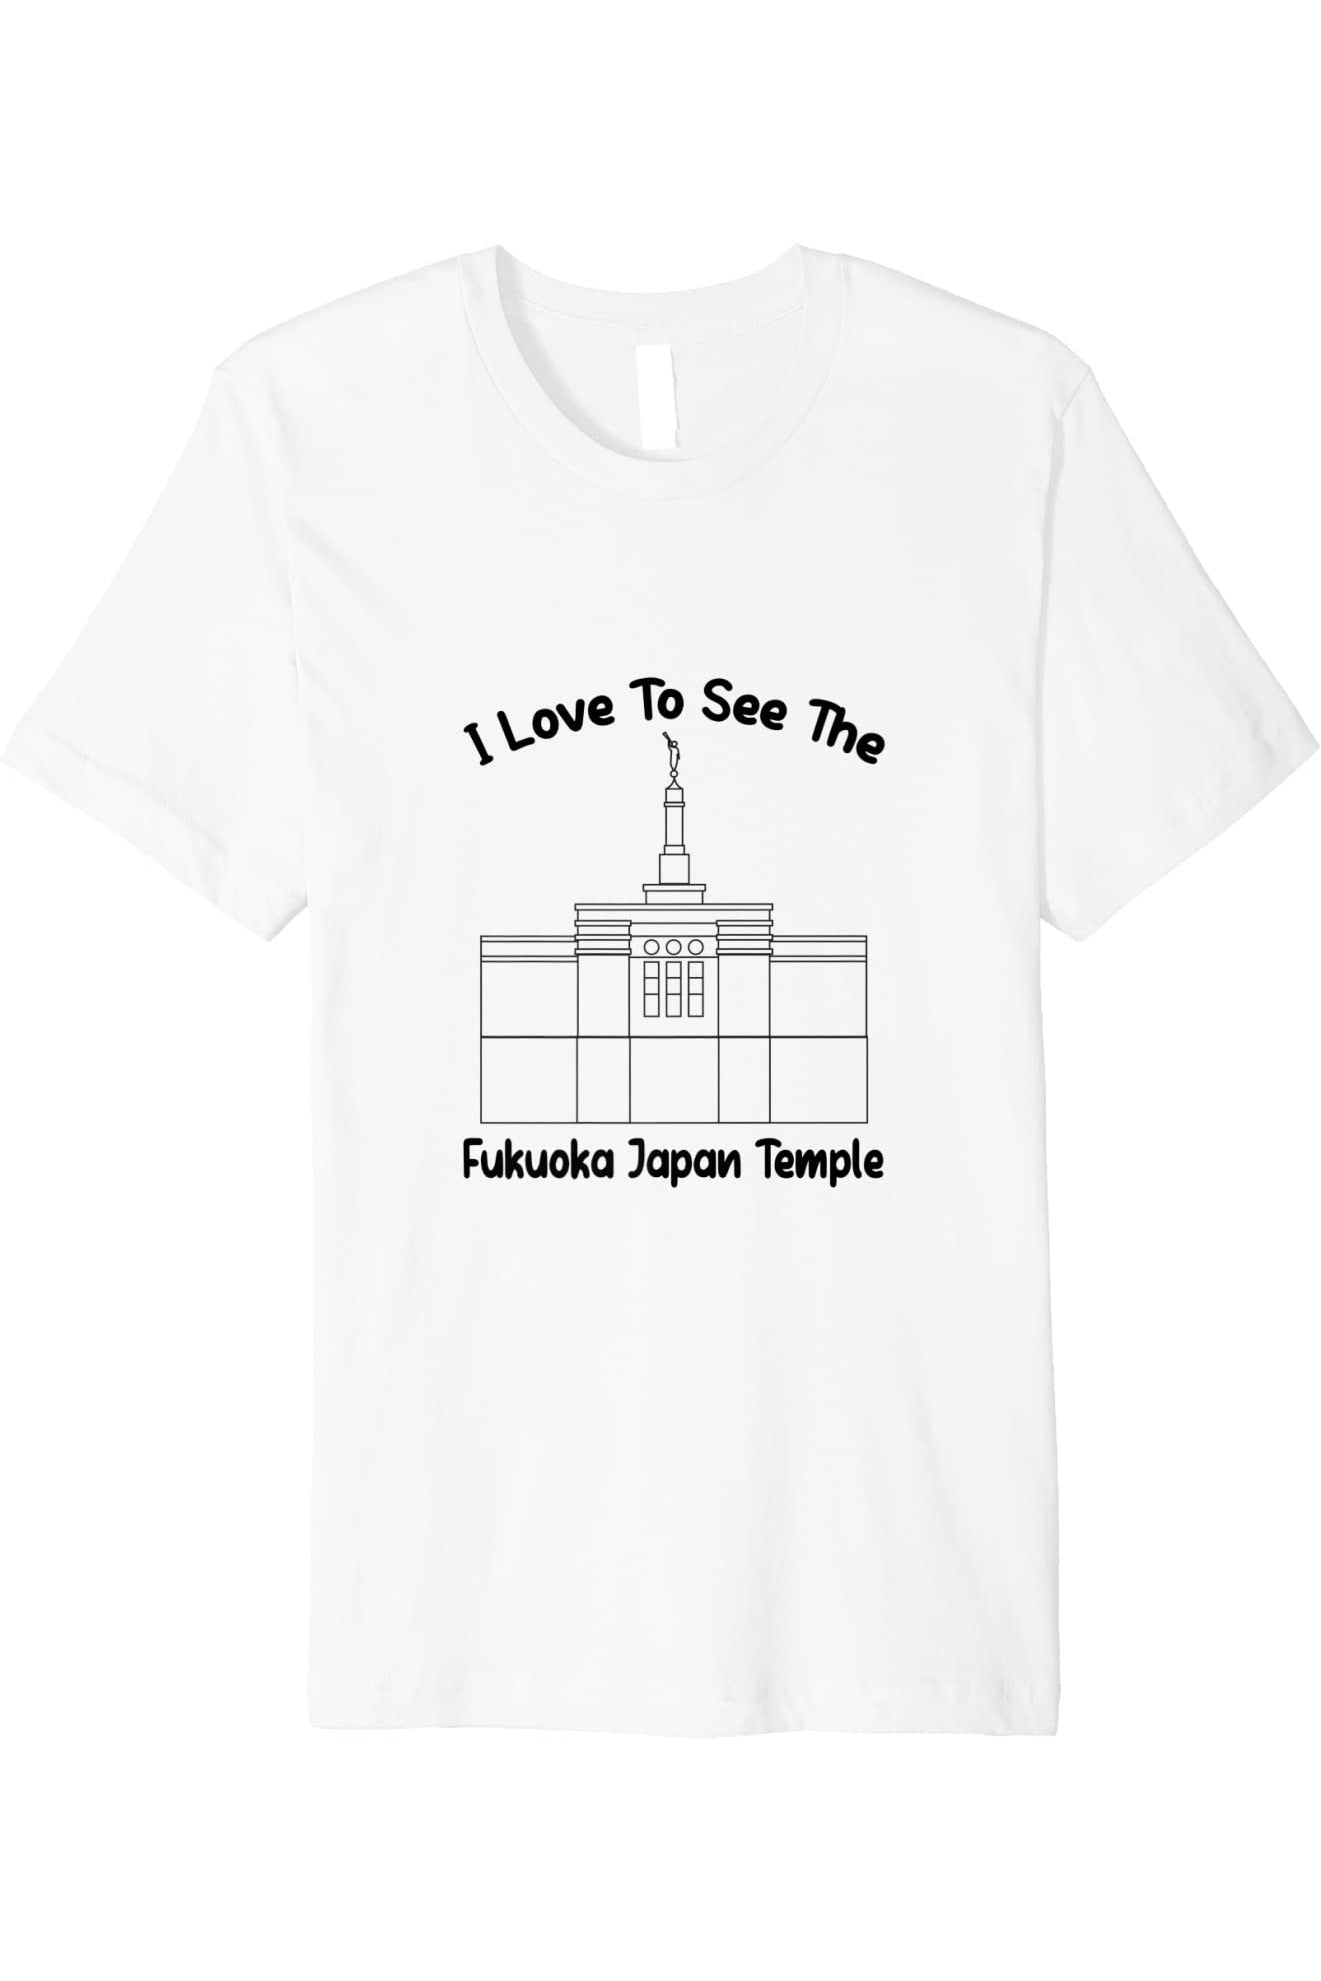 Fukuoka Japan Temple T-Shirt - Premium - Primary Style (English) US